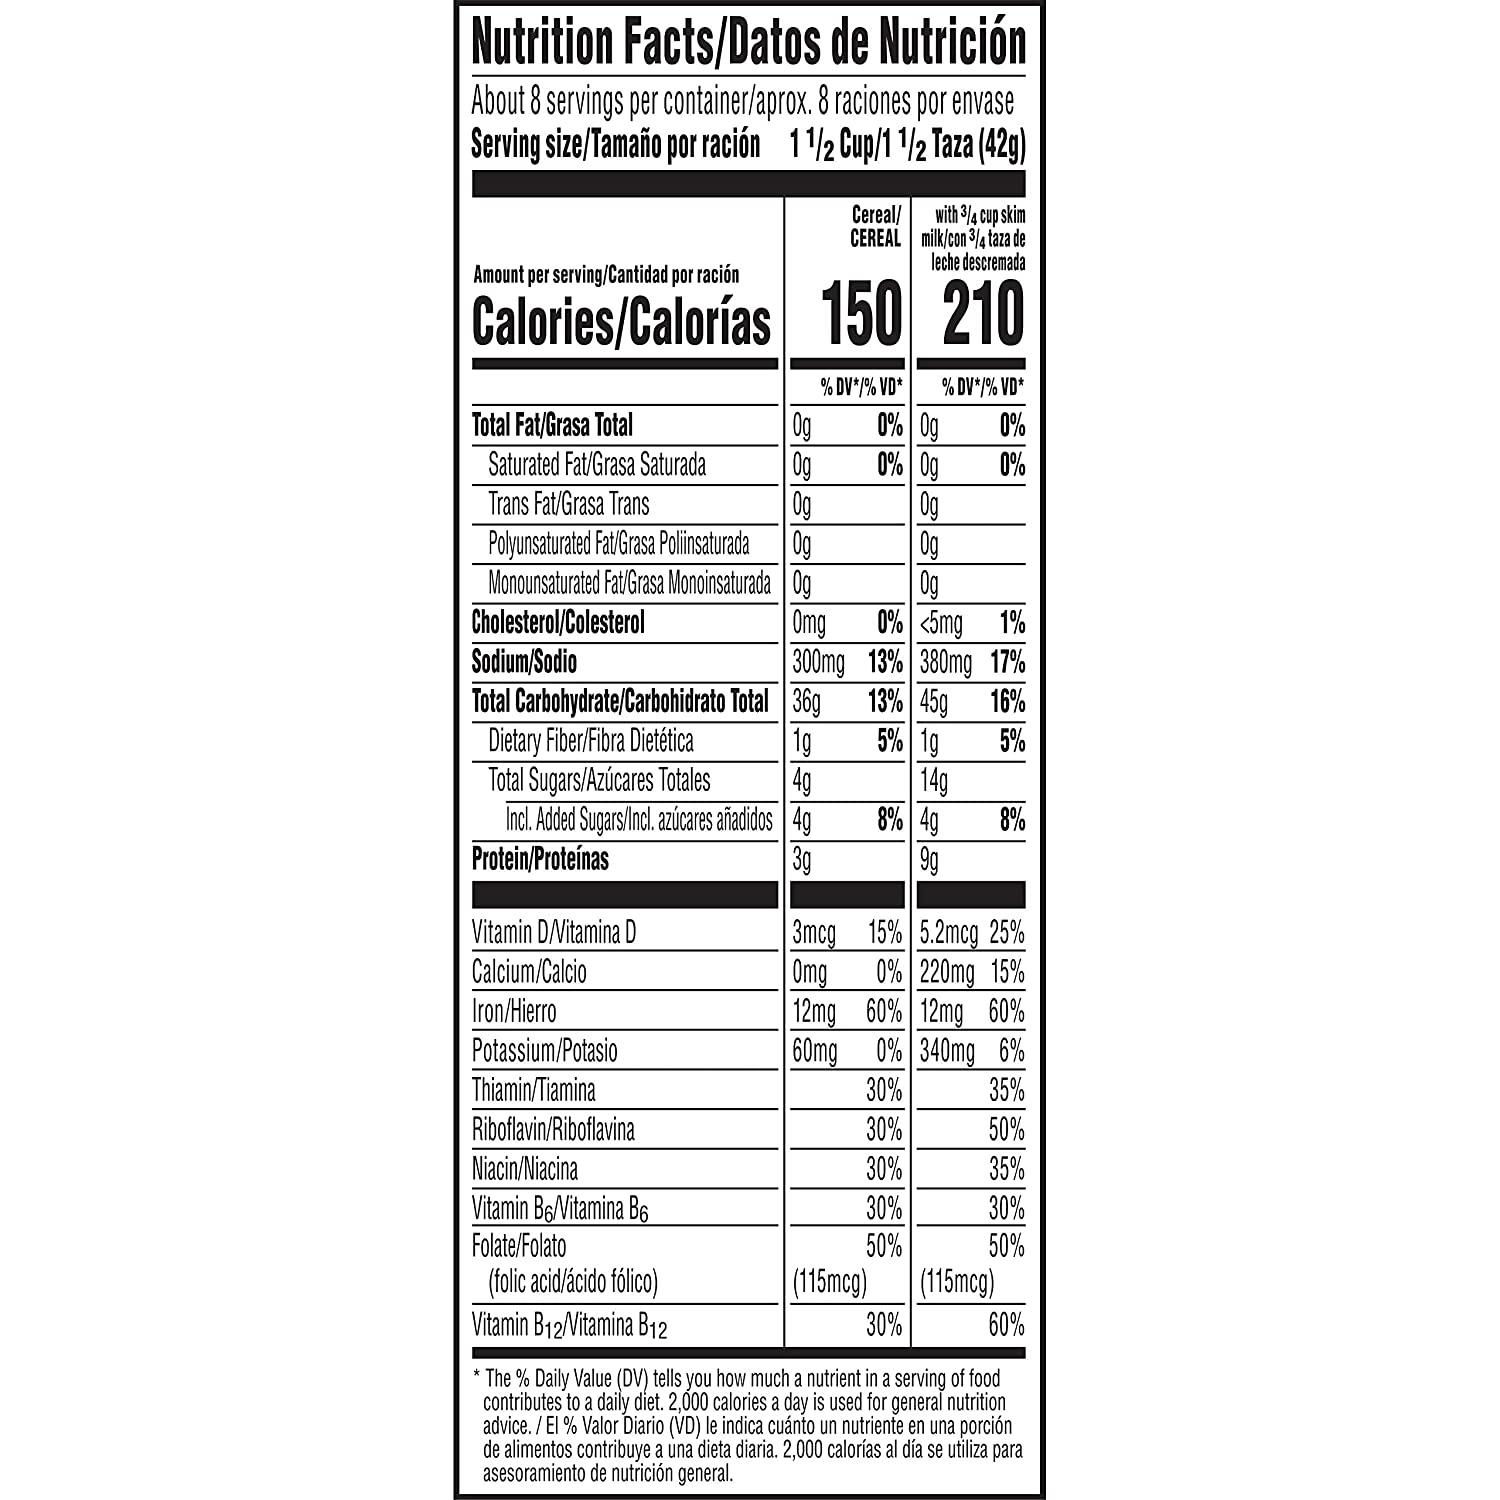 35 oz. Bag Corn Flakes Cereal - 4/Case